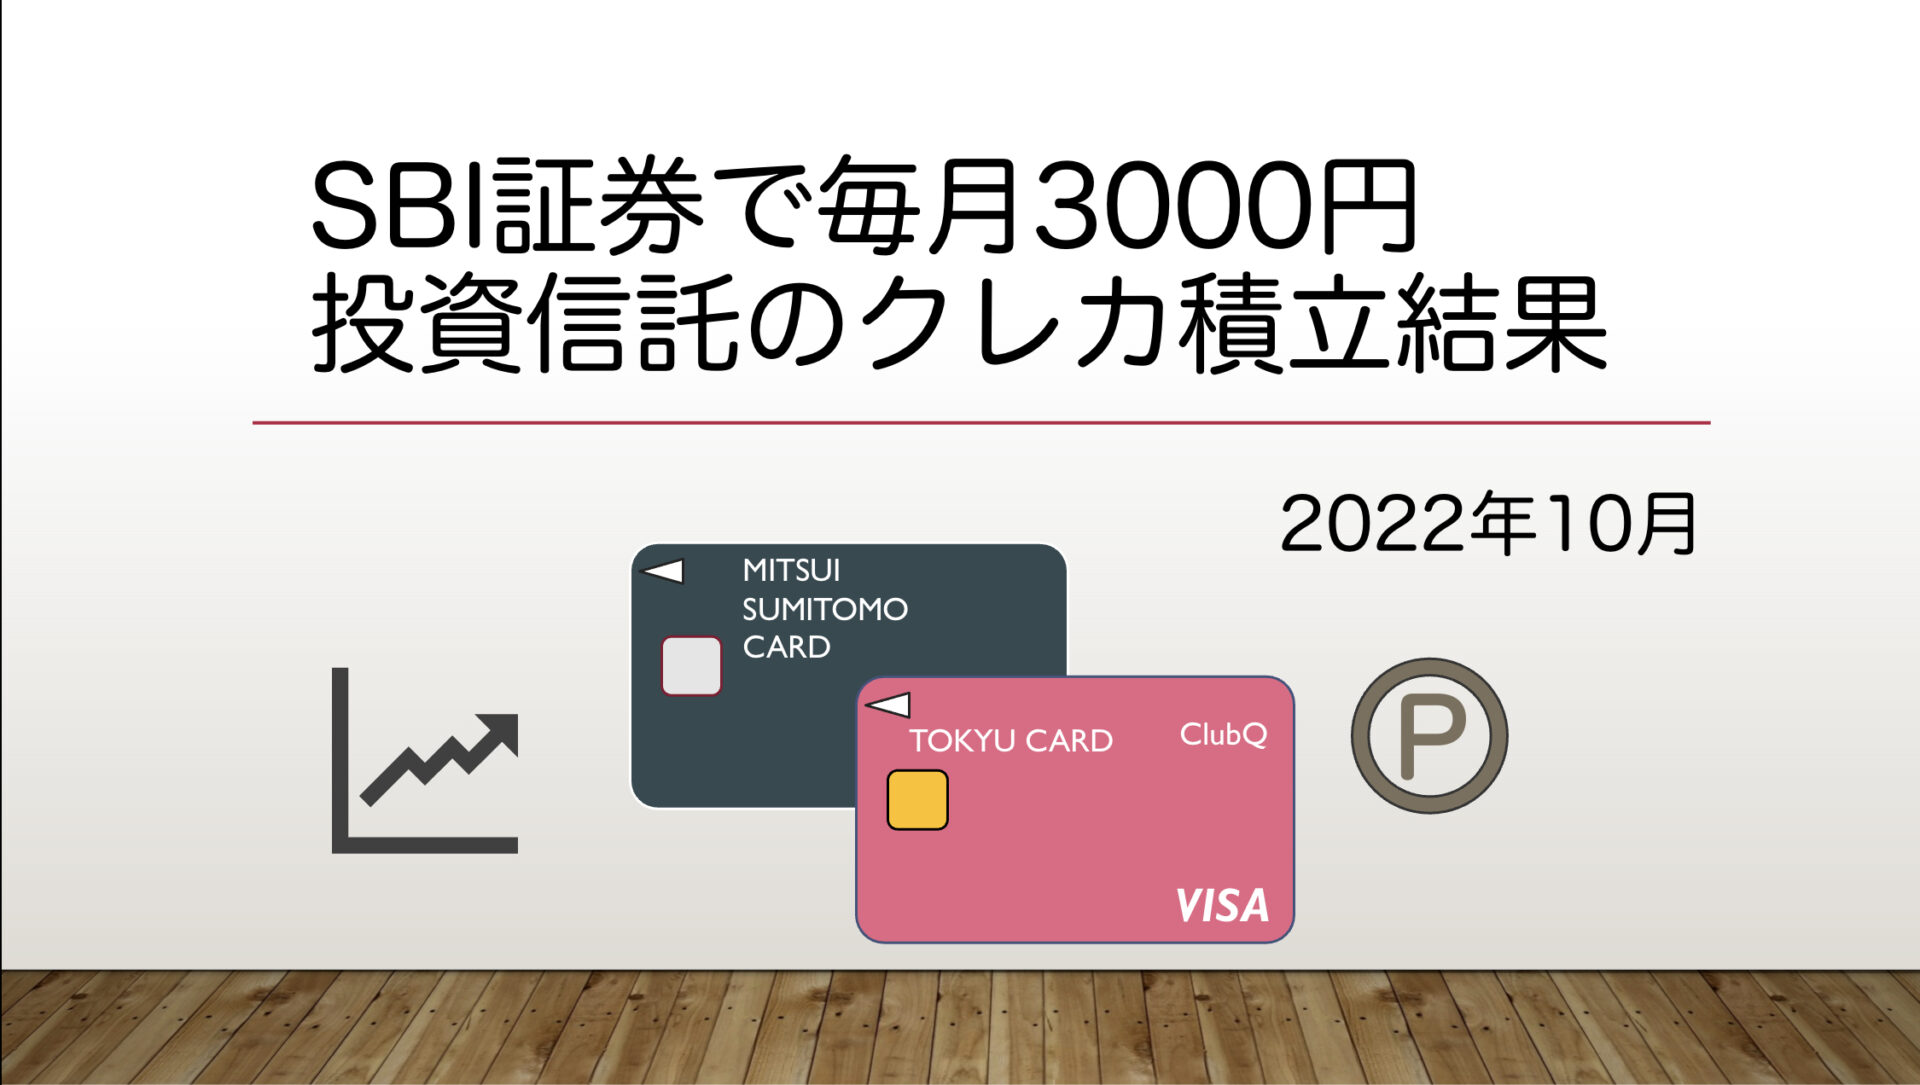 【SBI証券】三井住友カードによる投資信託のクレカ積立結果【2022年10月】